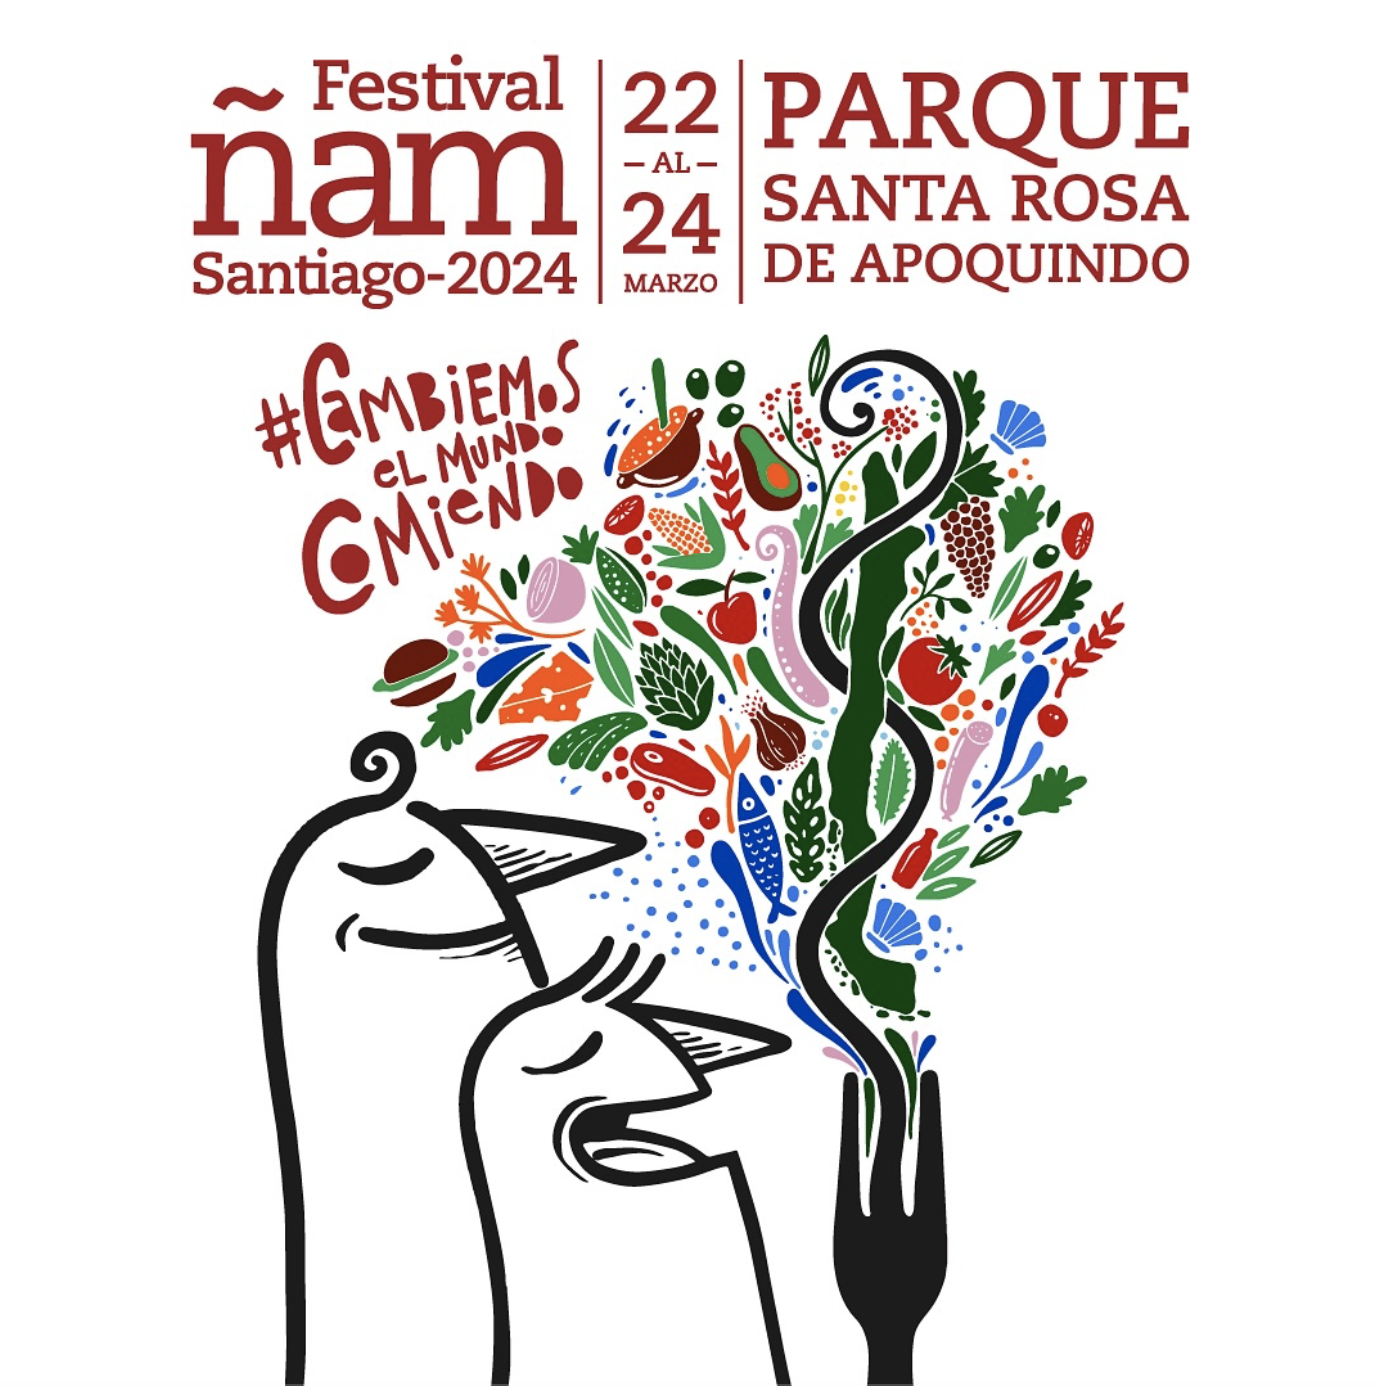 Festival Ñam Santiago 2024